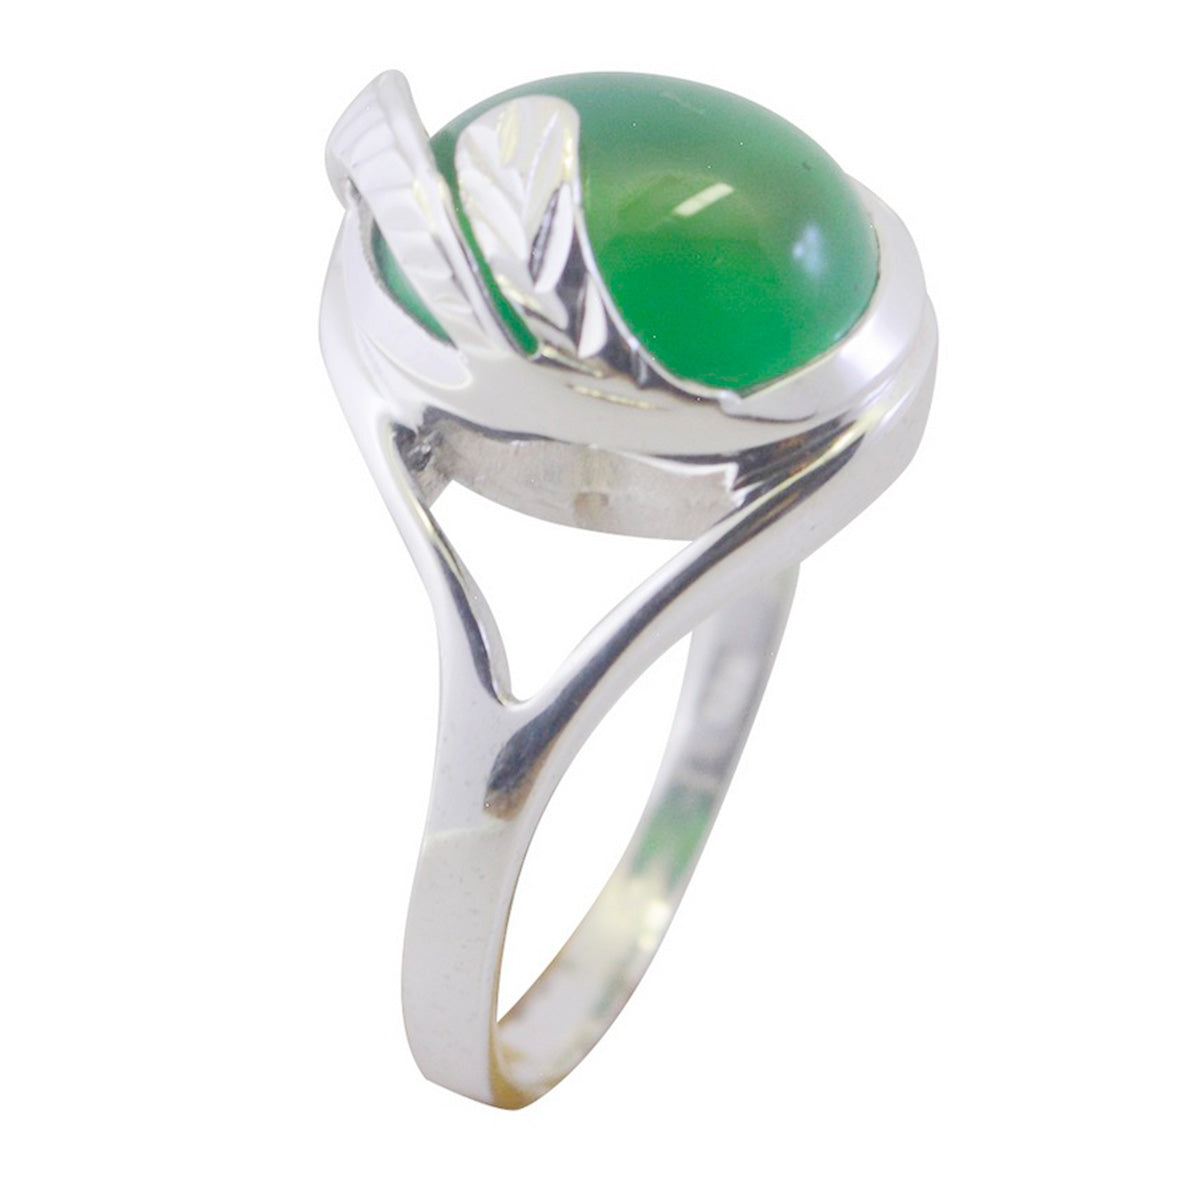 Riyo Ideal Stone Green Onyx 925 Sterling Silver Ring Jewelry Bag